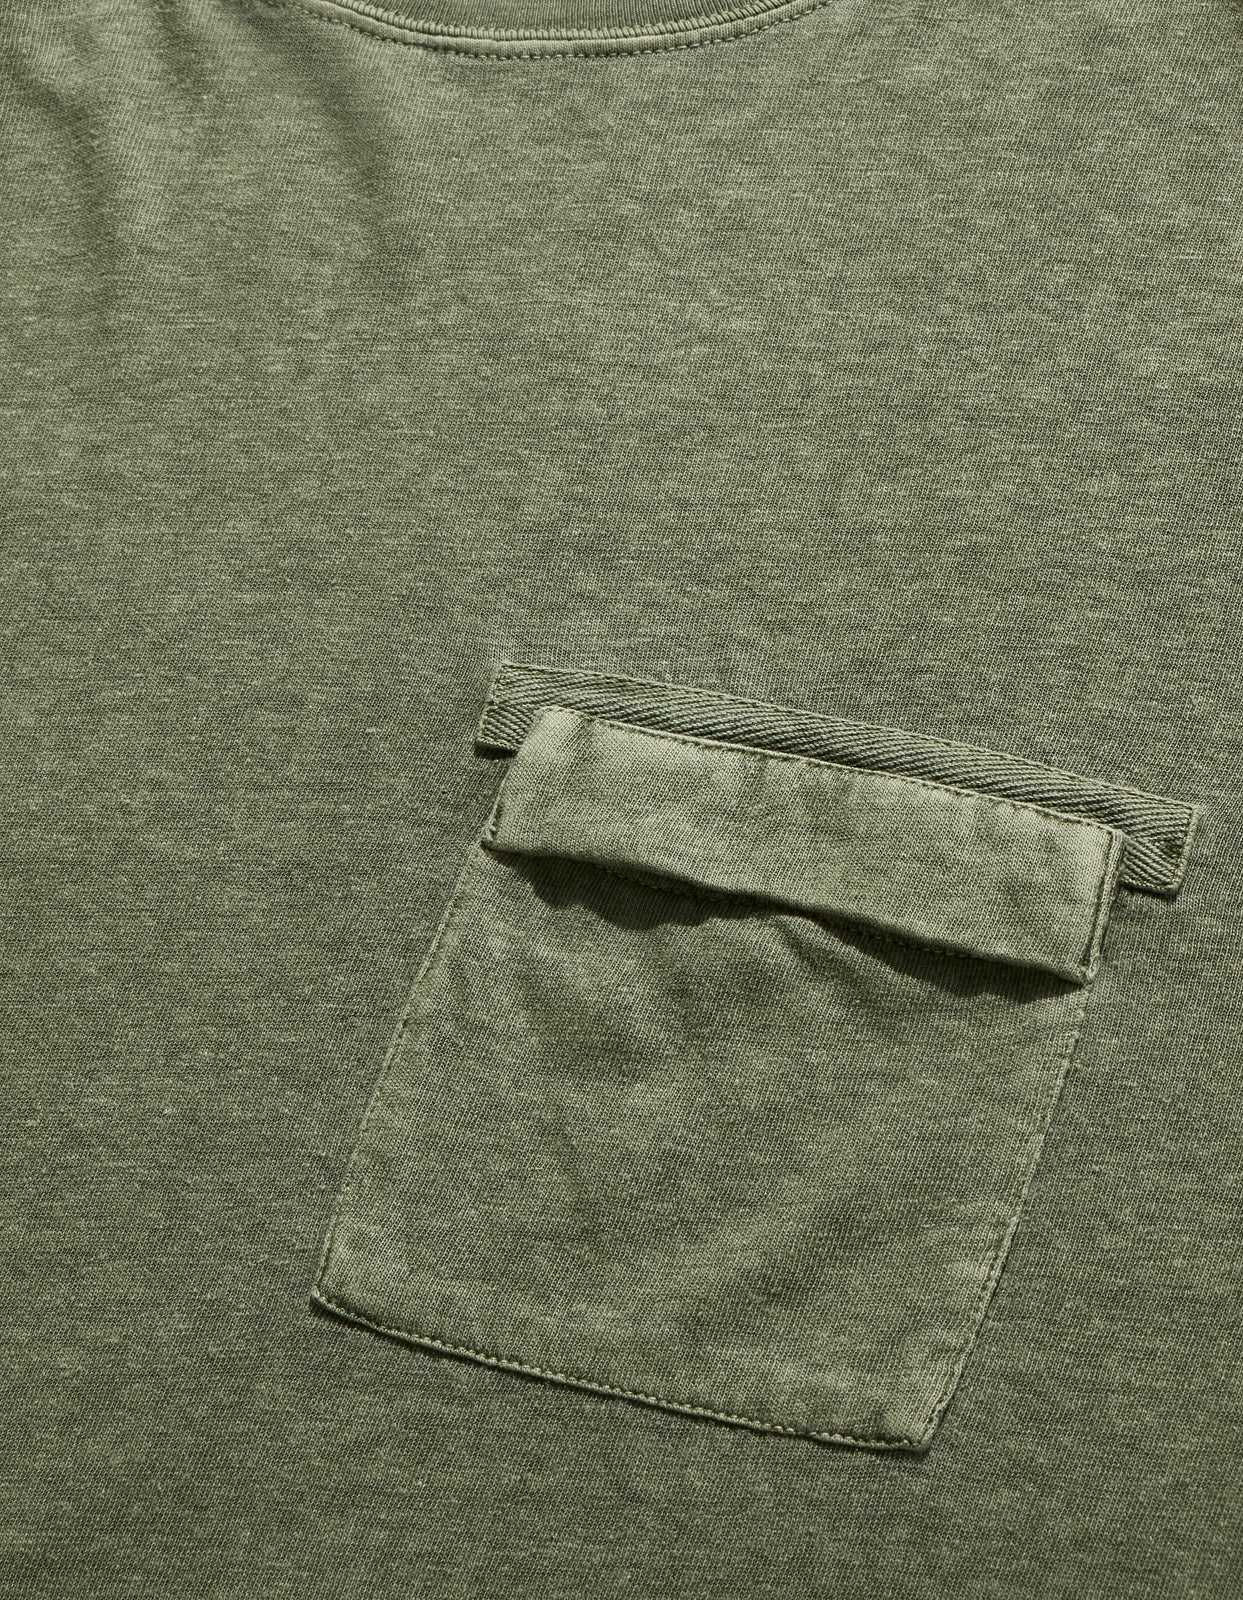 8010 Hemp Organic L/S Pocket T-Shirt Olive OG-107F